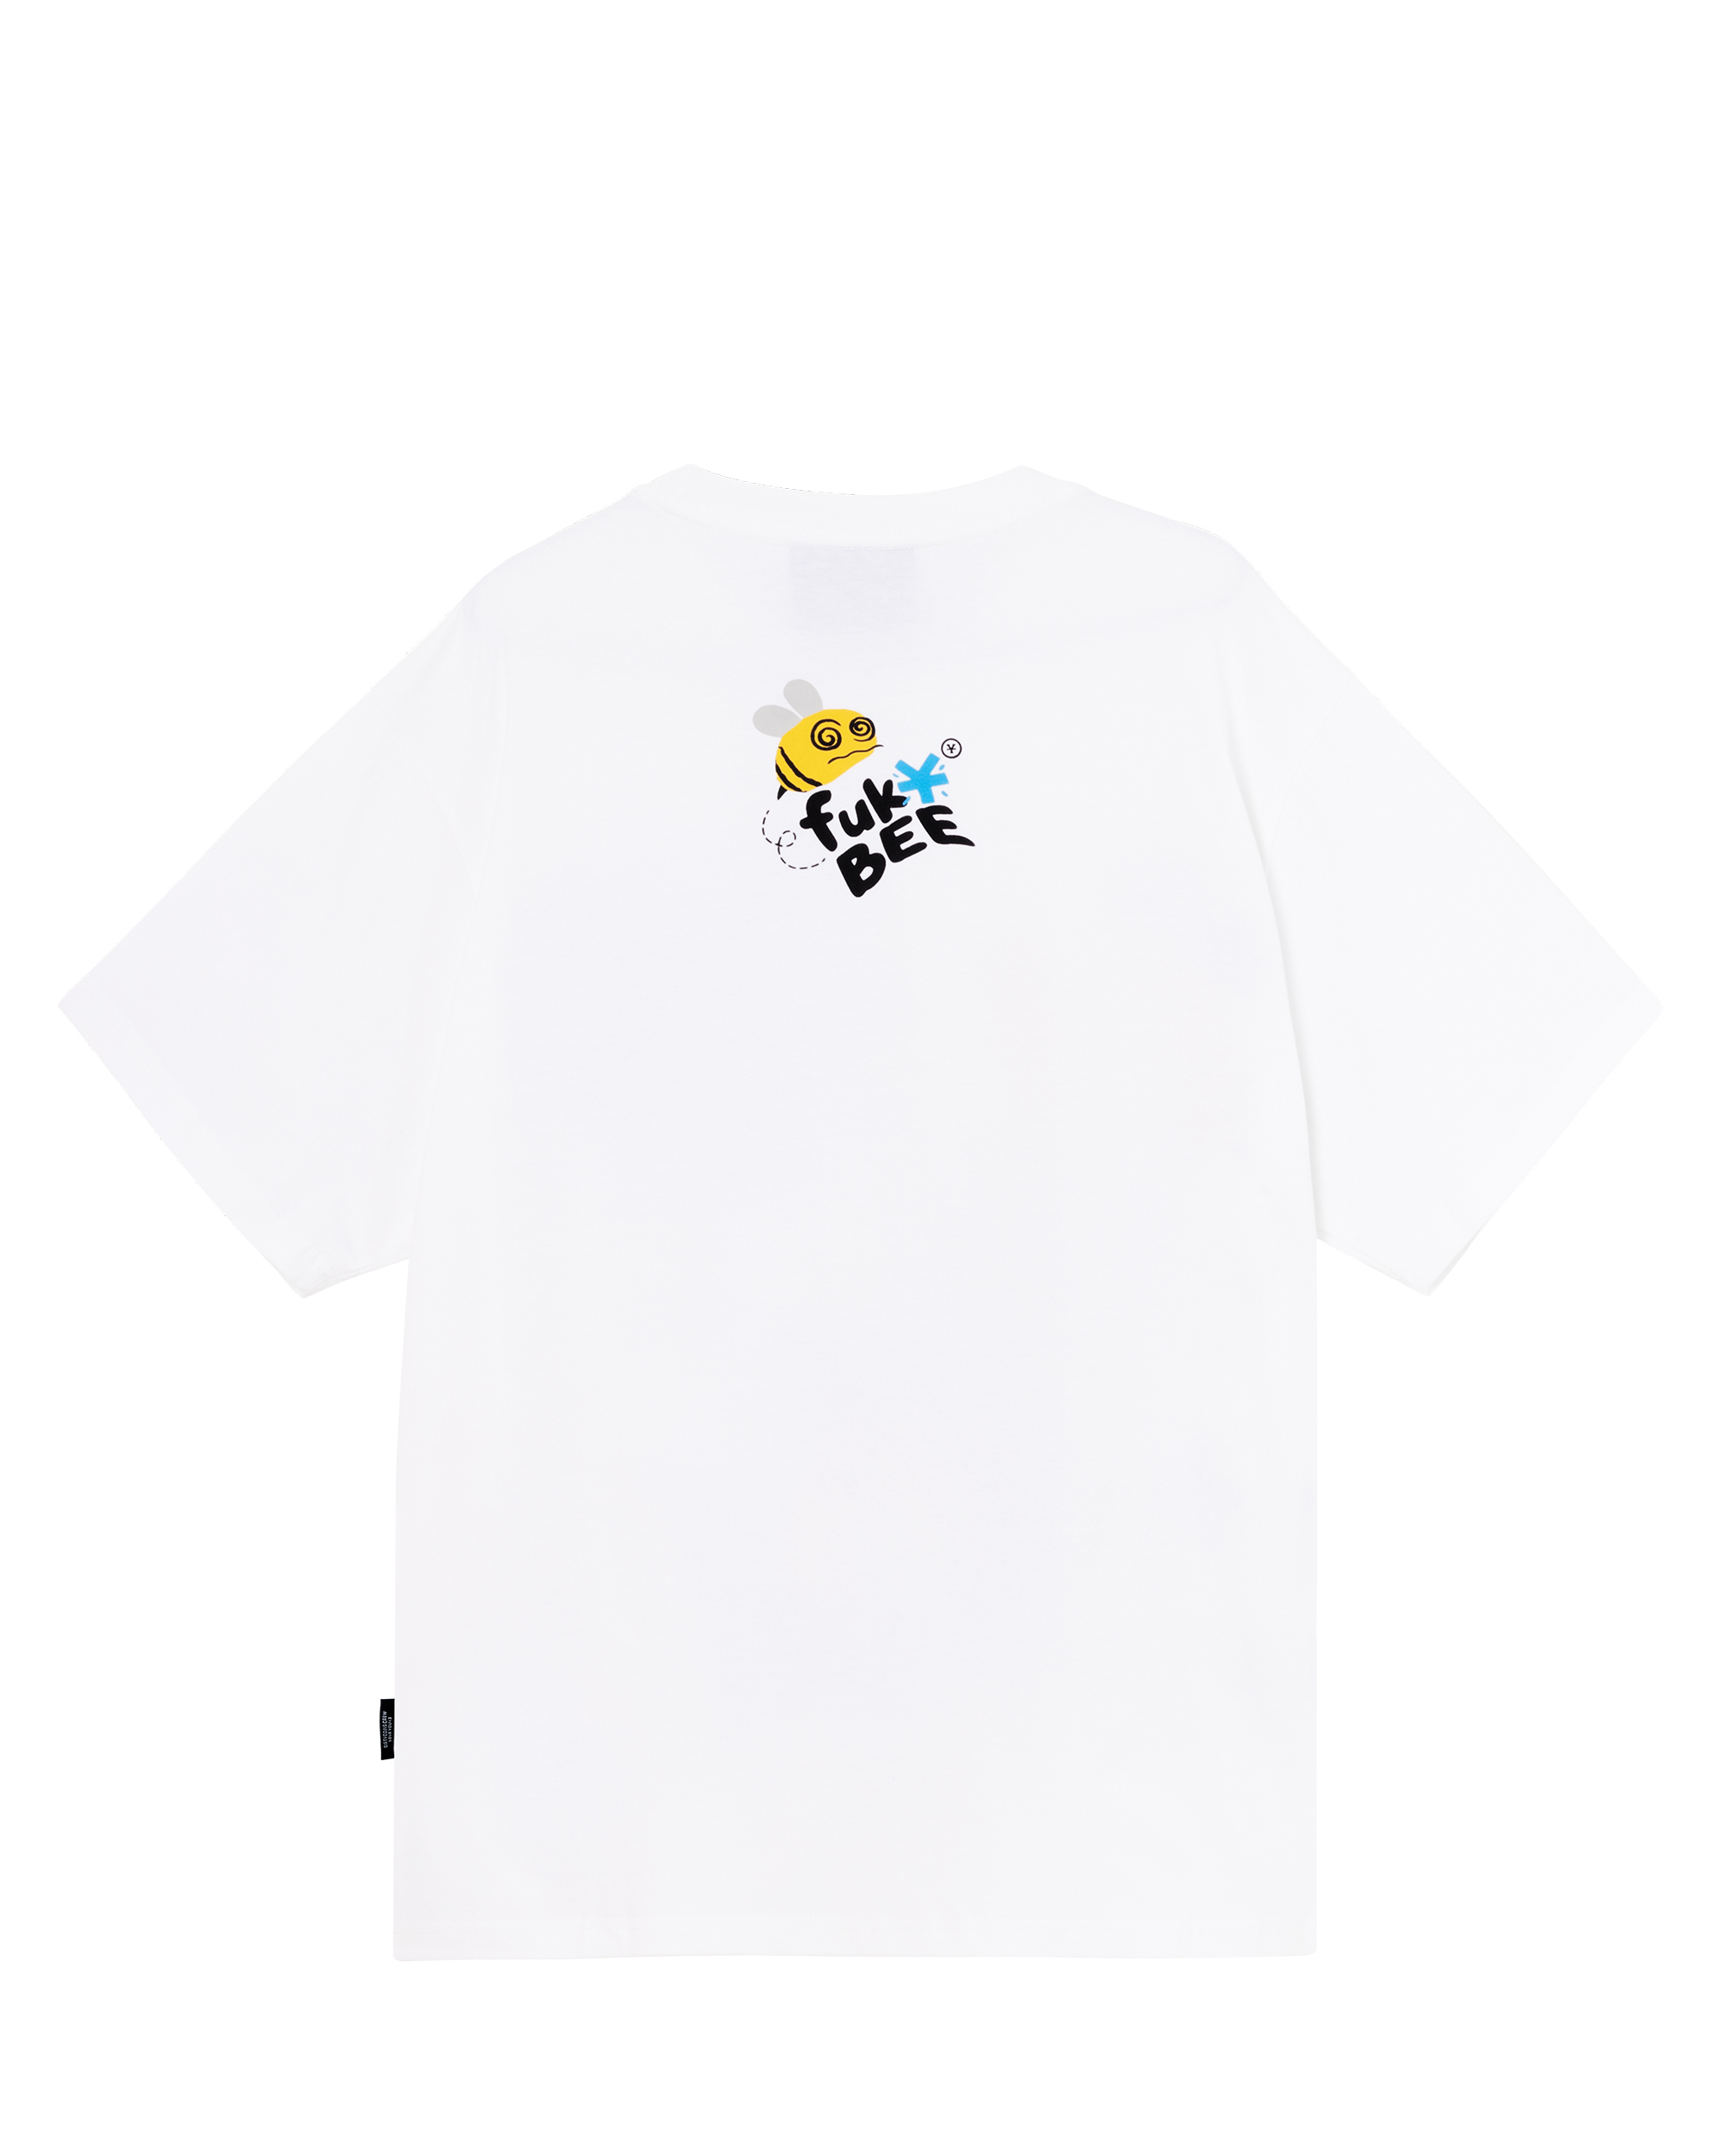 DirtyCoins Fukybee T-shirt - White